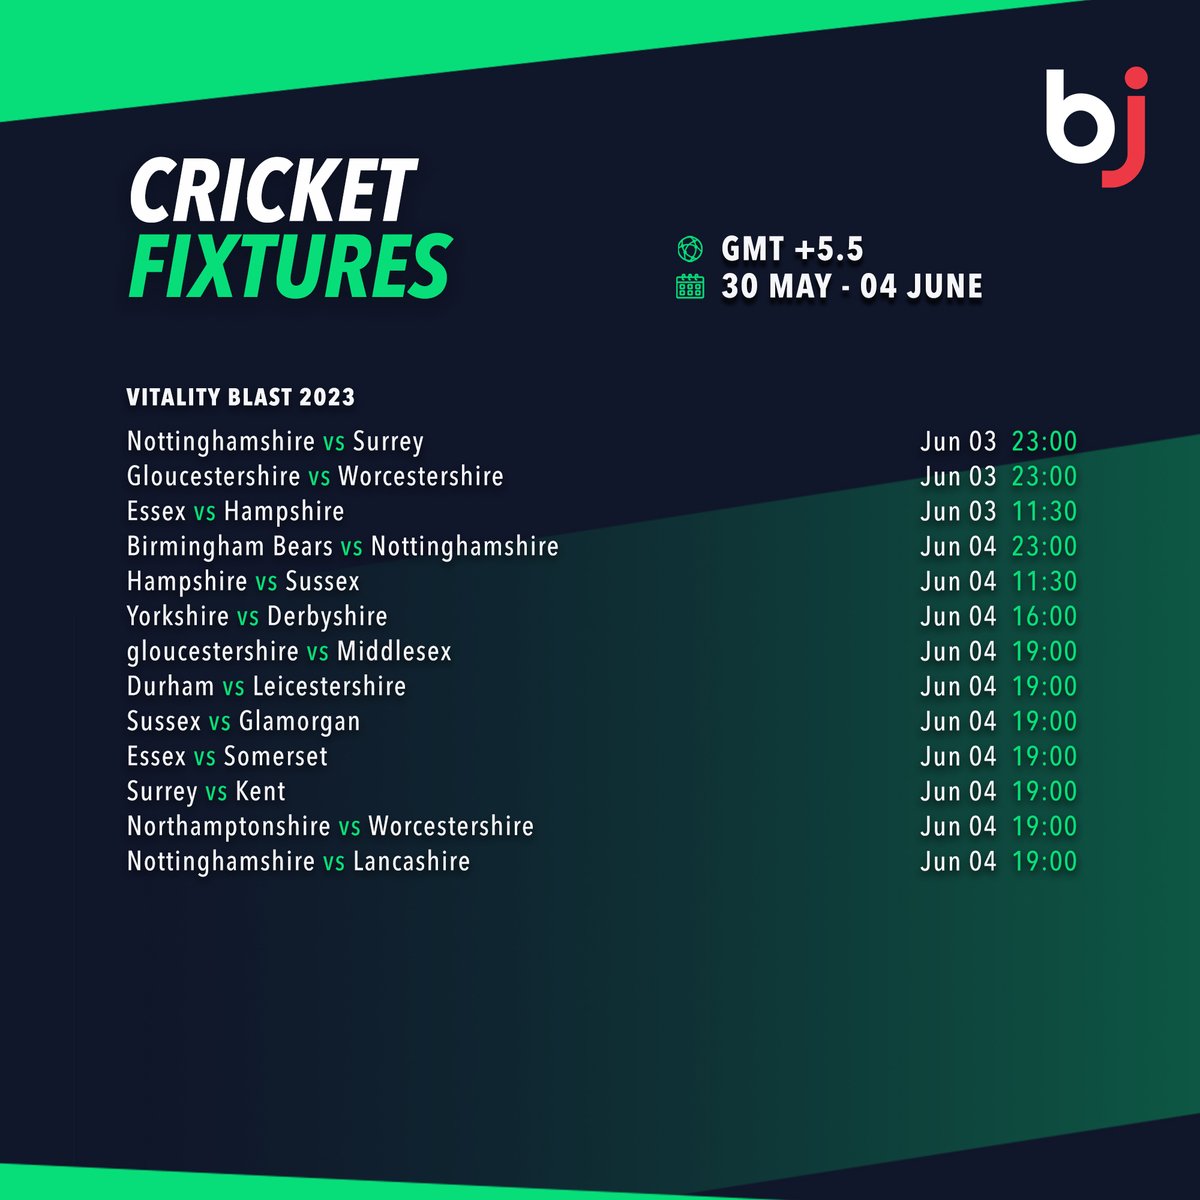 Check out next week's Vitality Blast League match schedule at a glance only on Baji !!

💥Register as a BjBaji5.com Member Now!!💥

#Baji #BJ #Sports #Cricket #Schedule #CricketFixture #VitalityBlast